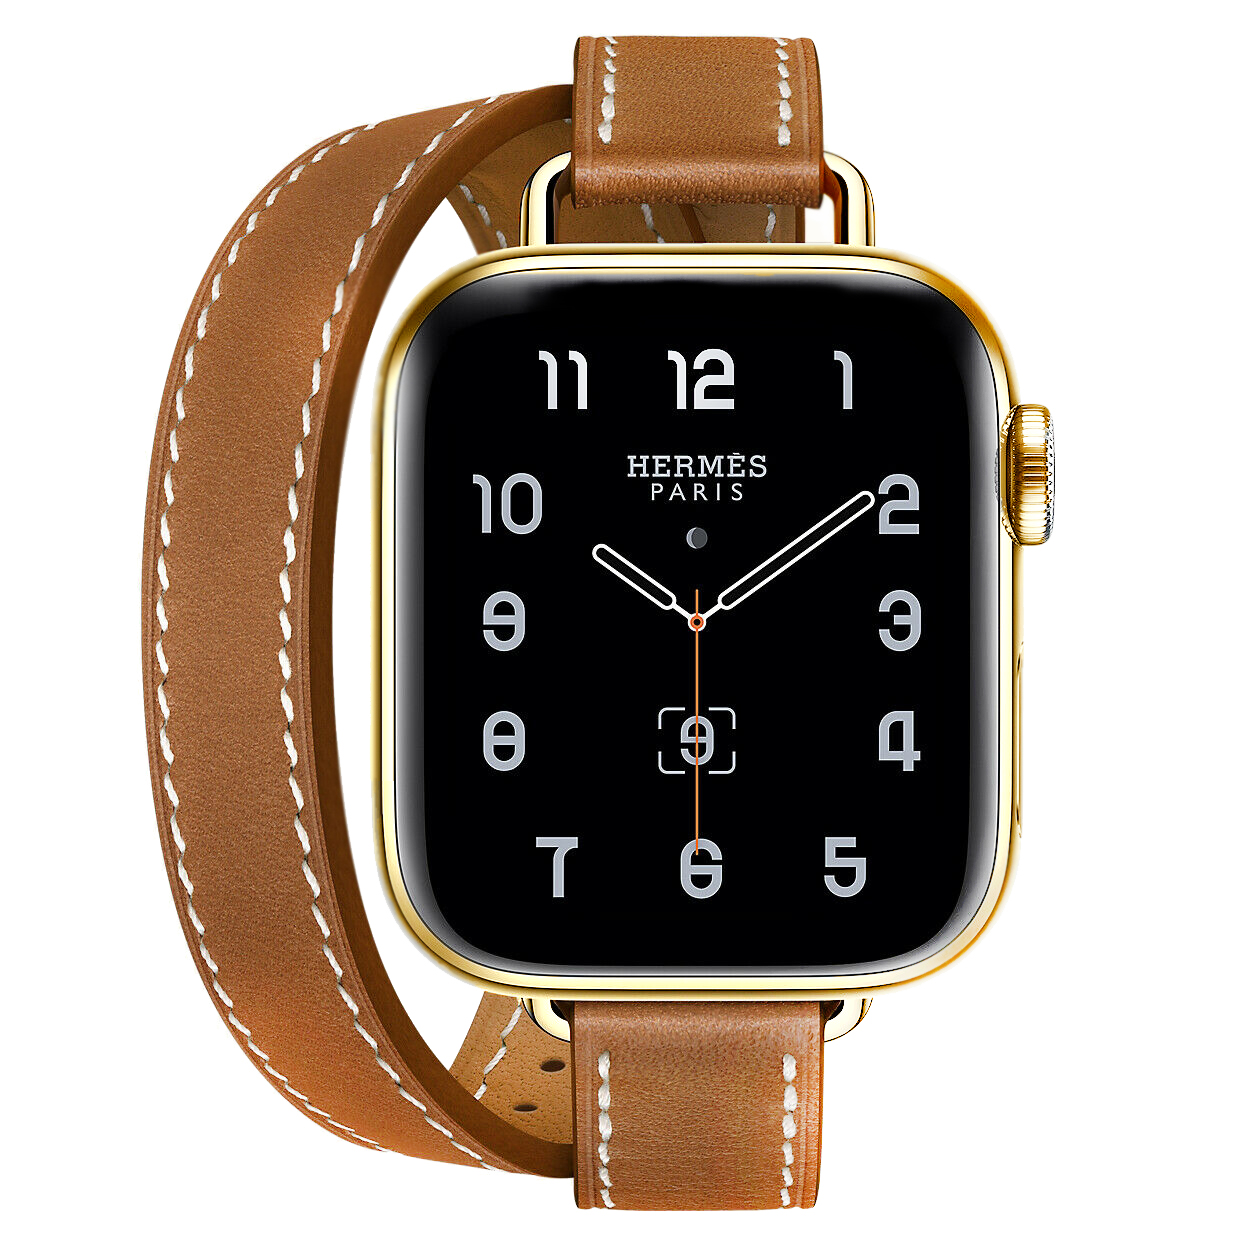 Hermes Apple Watch: PHOTOS